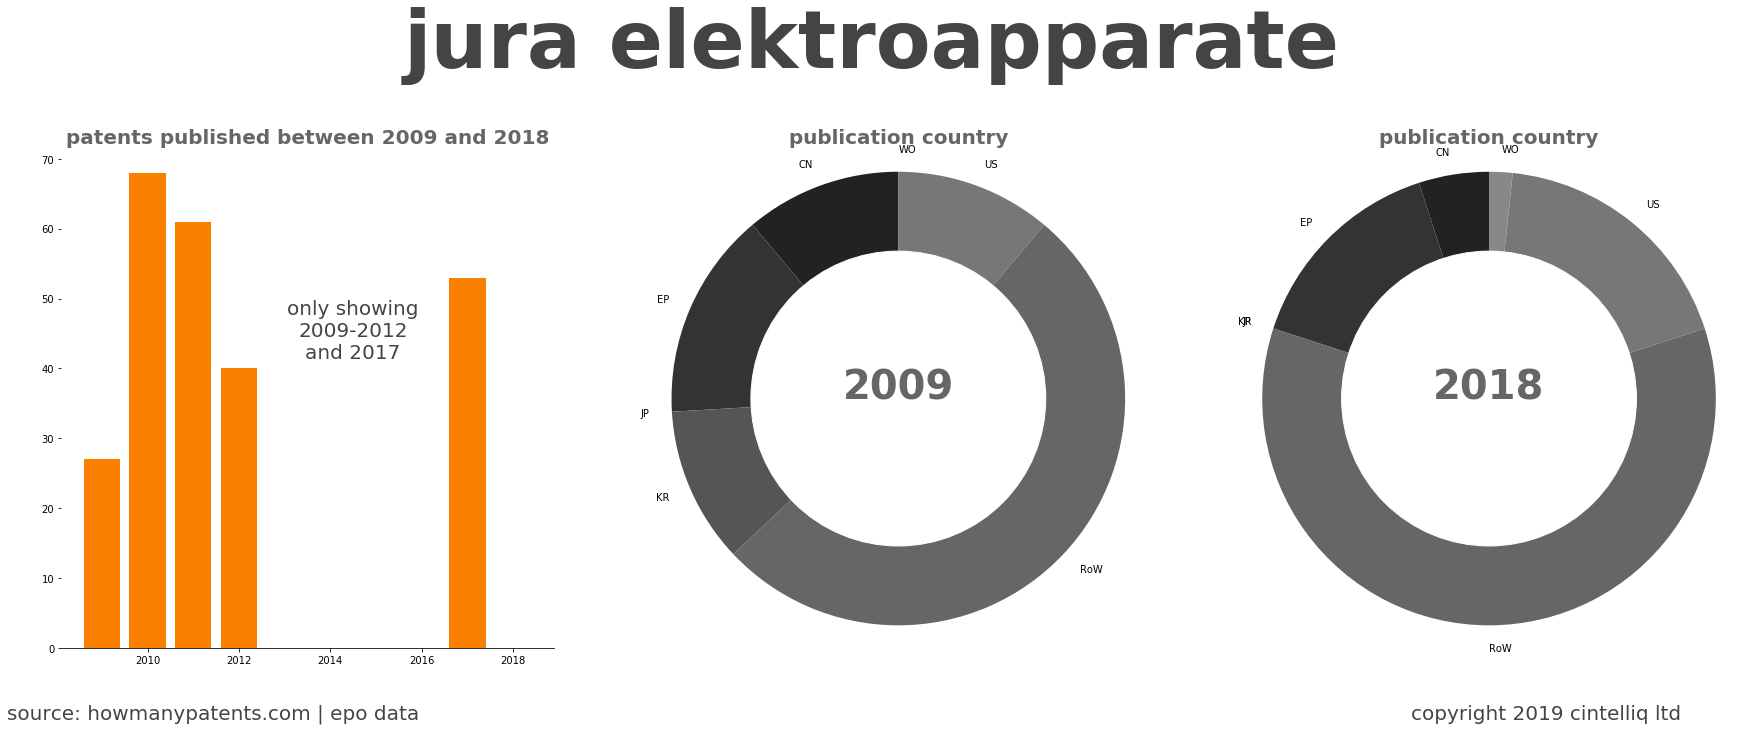 summary of patents for Jura Elektroapparate